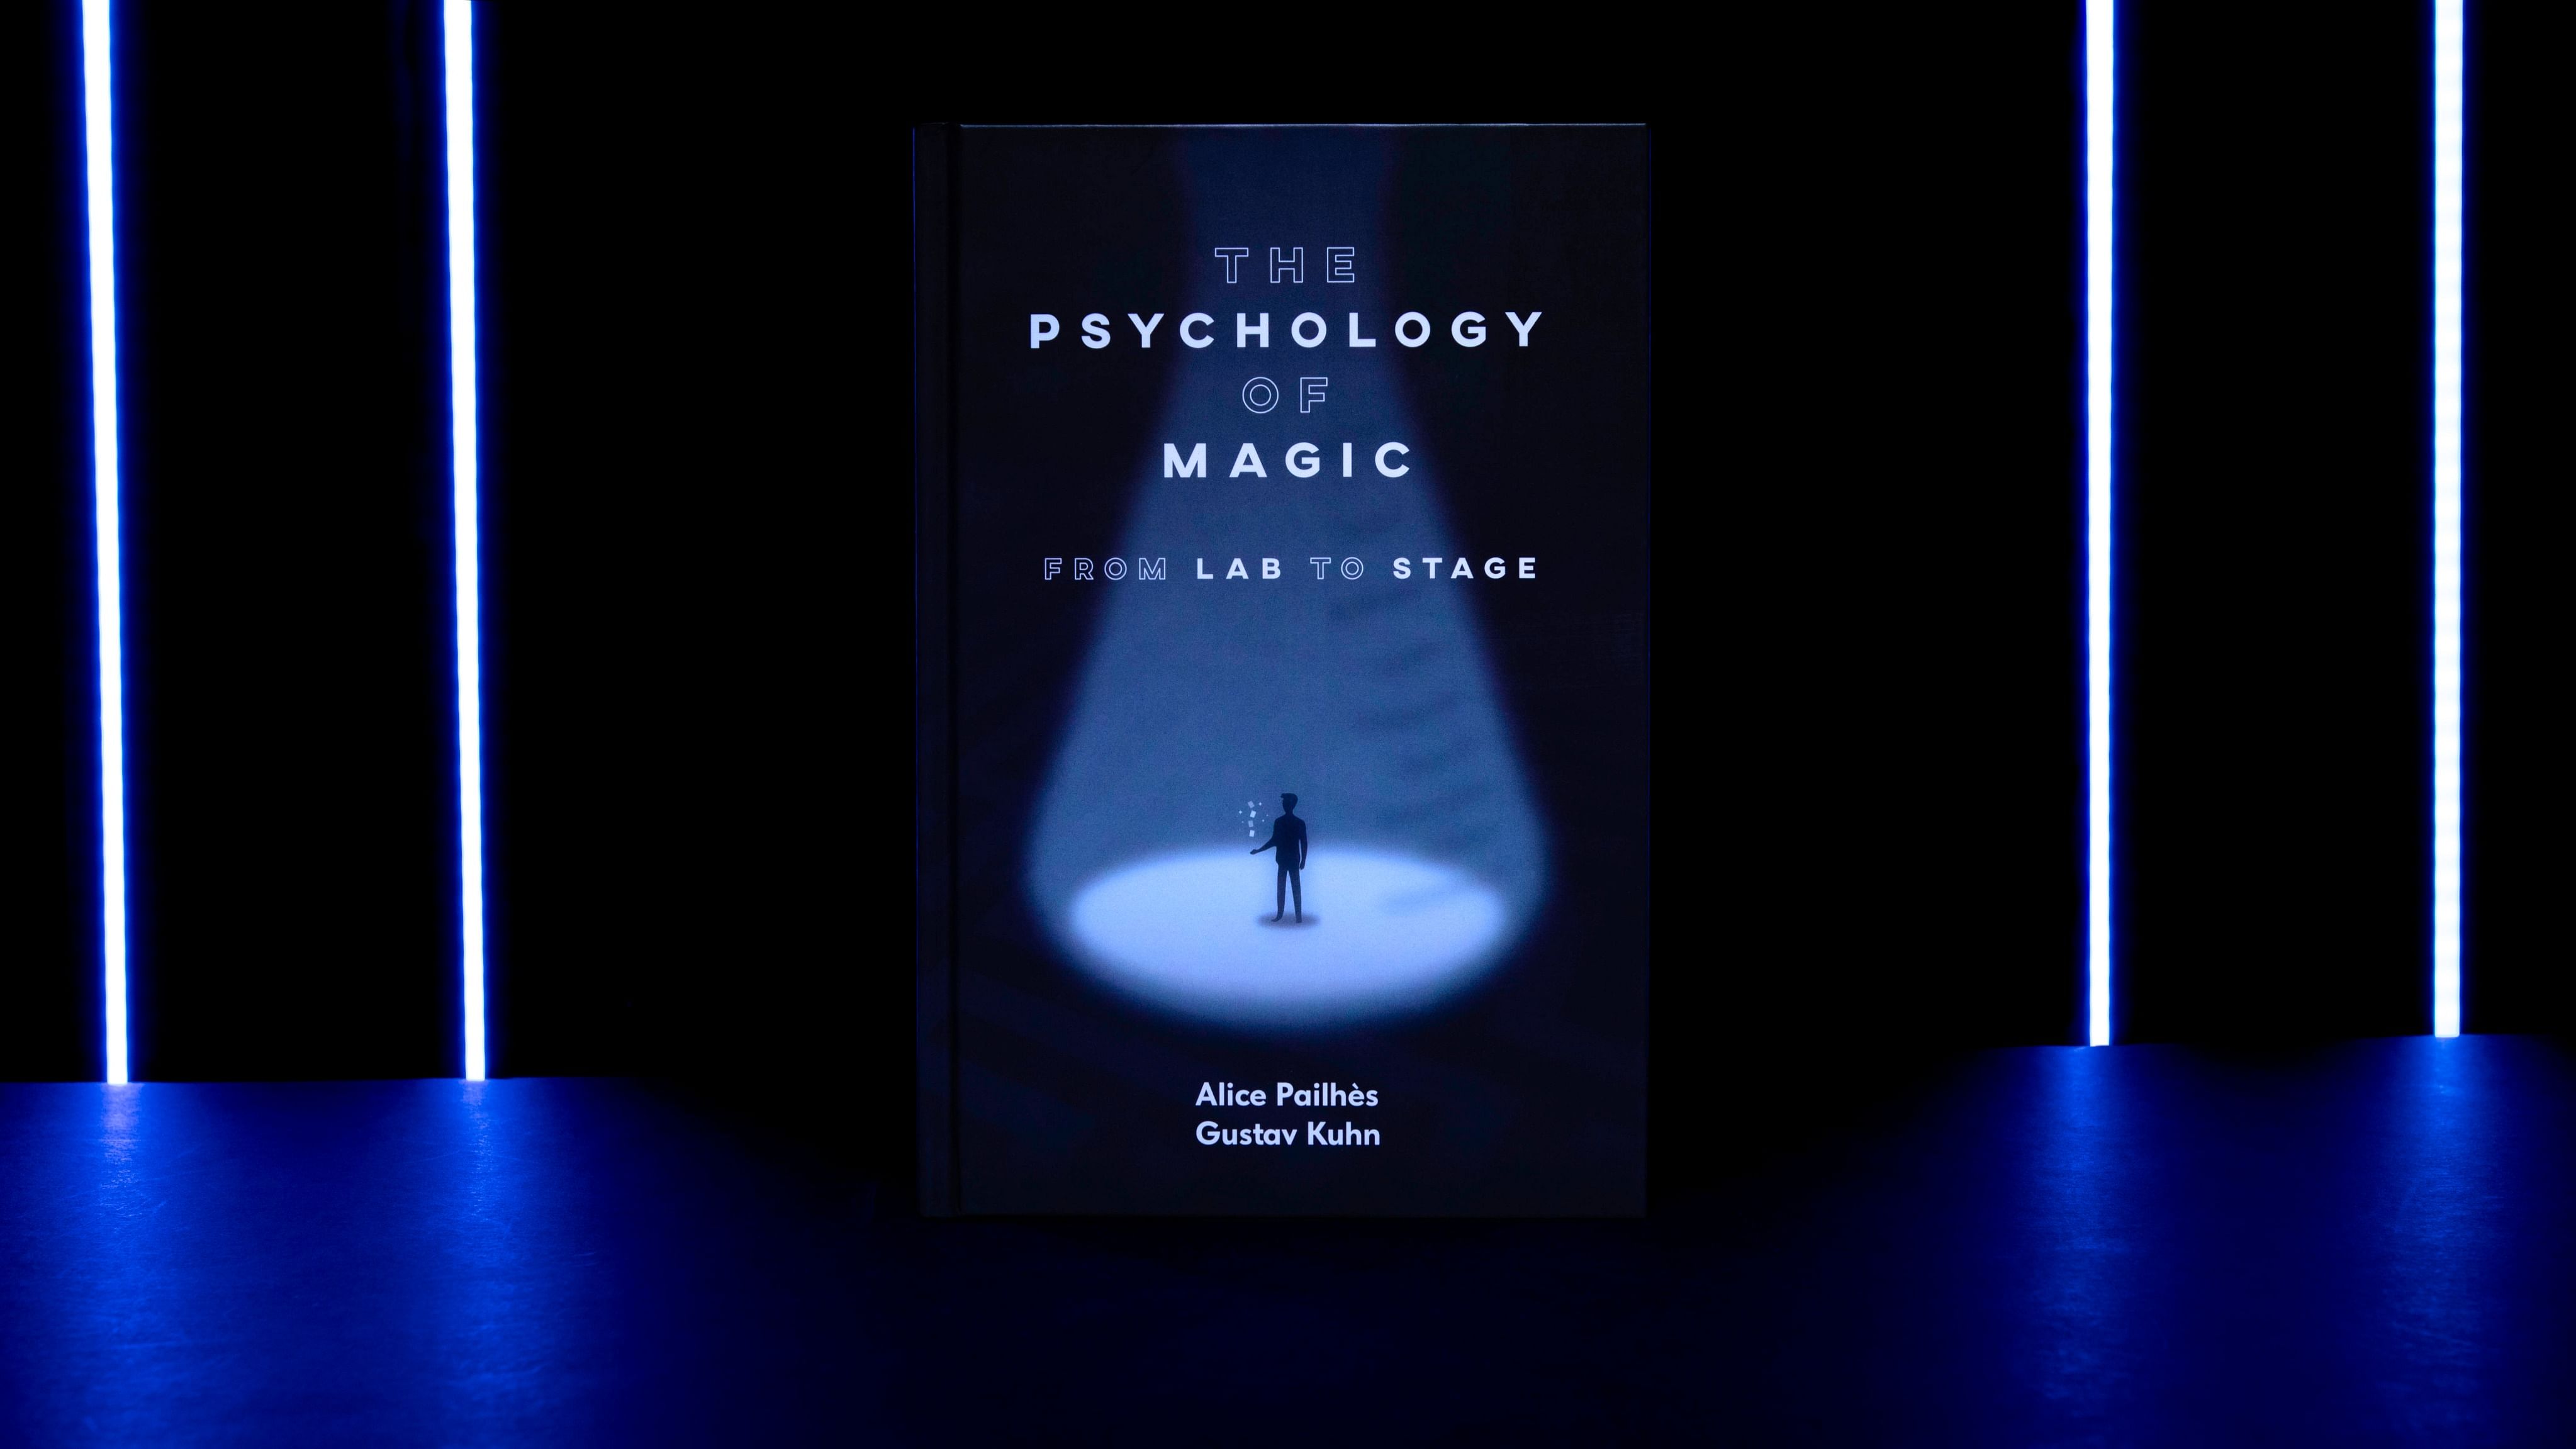 Psychology's Magician